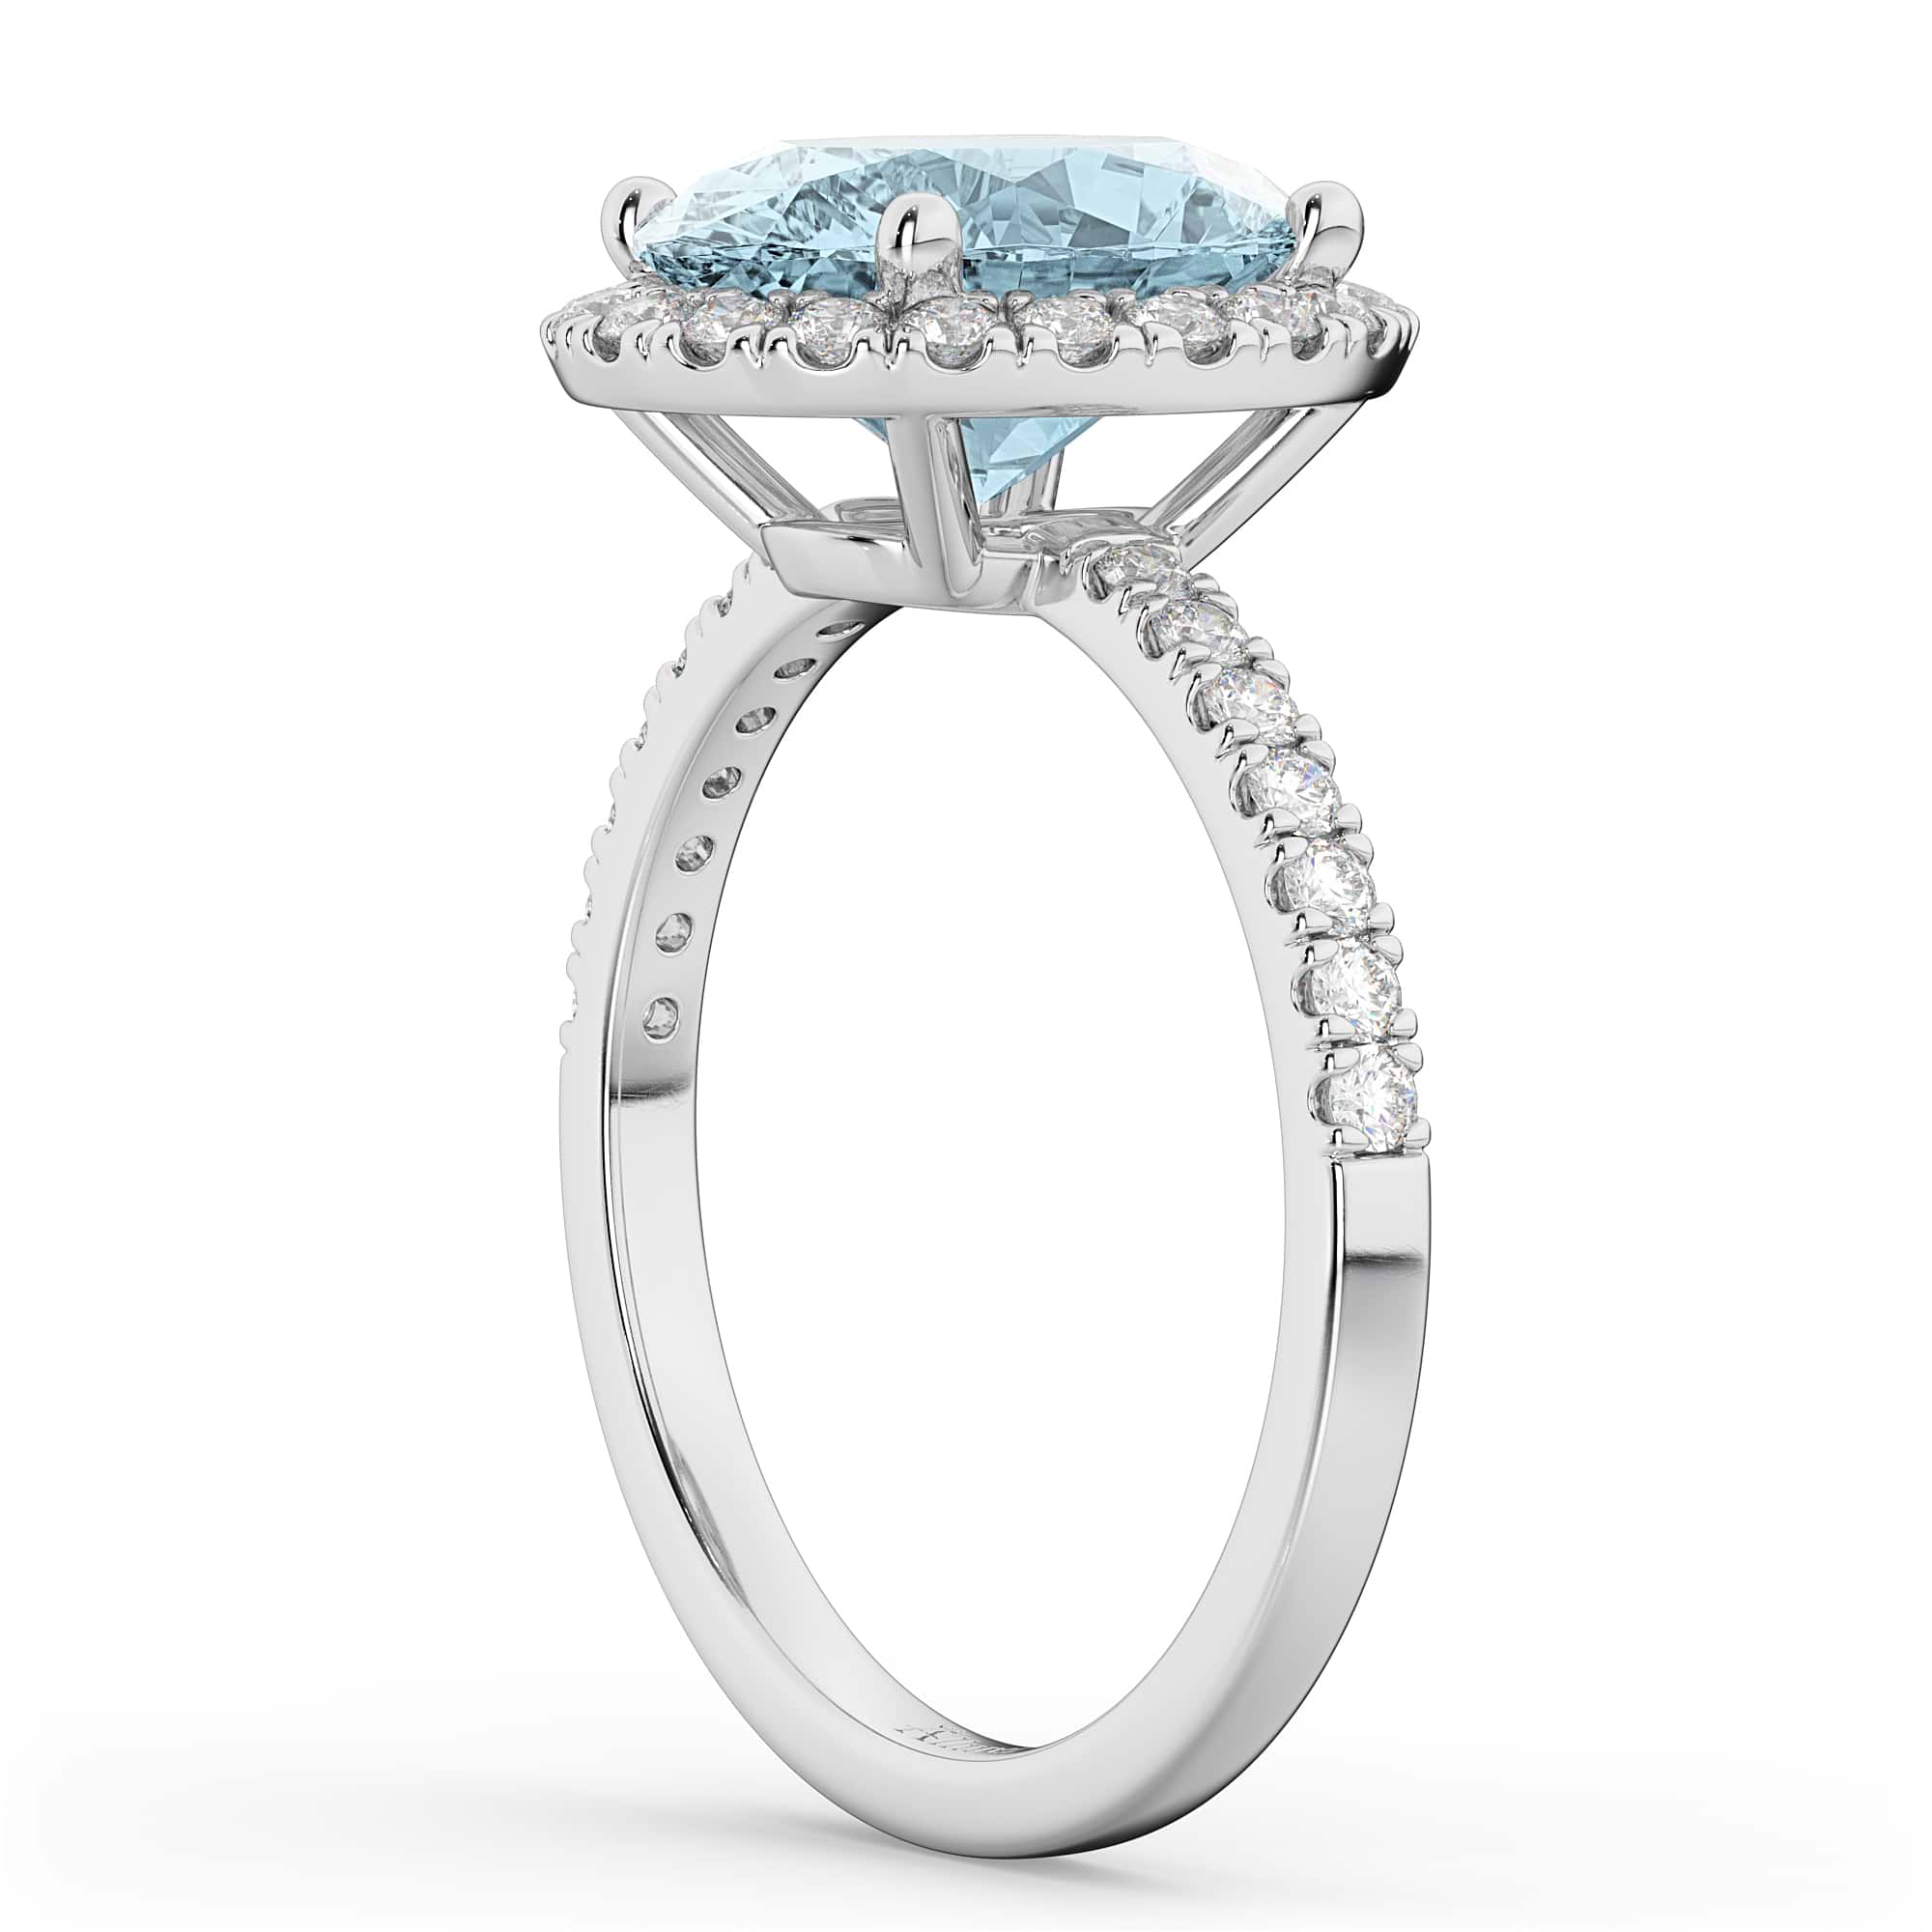 Oval Cut Halo Aquamarine & Diamond Engagement Ring 14K White Gold 2.76ct